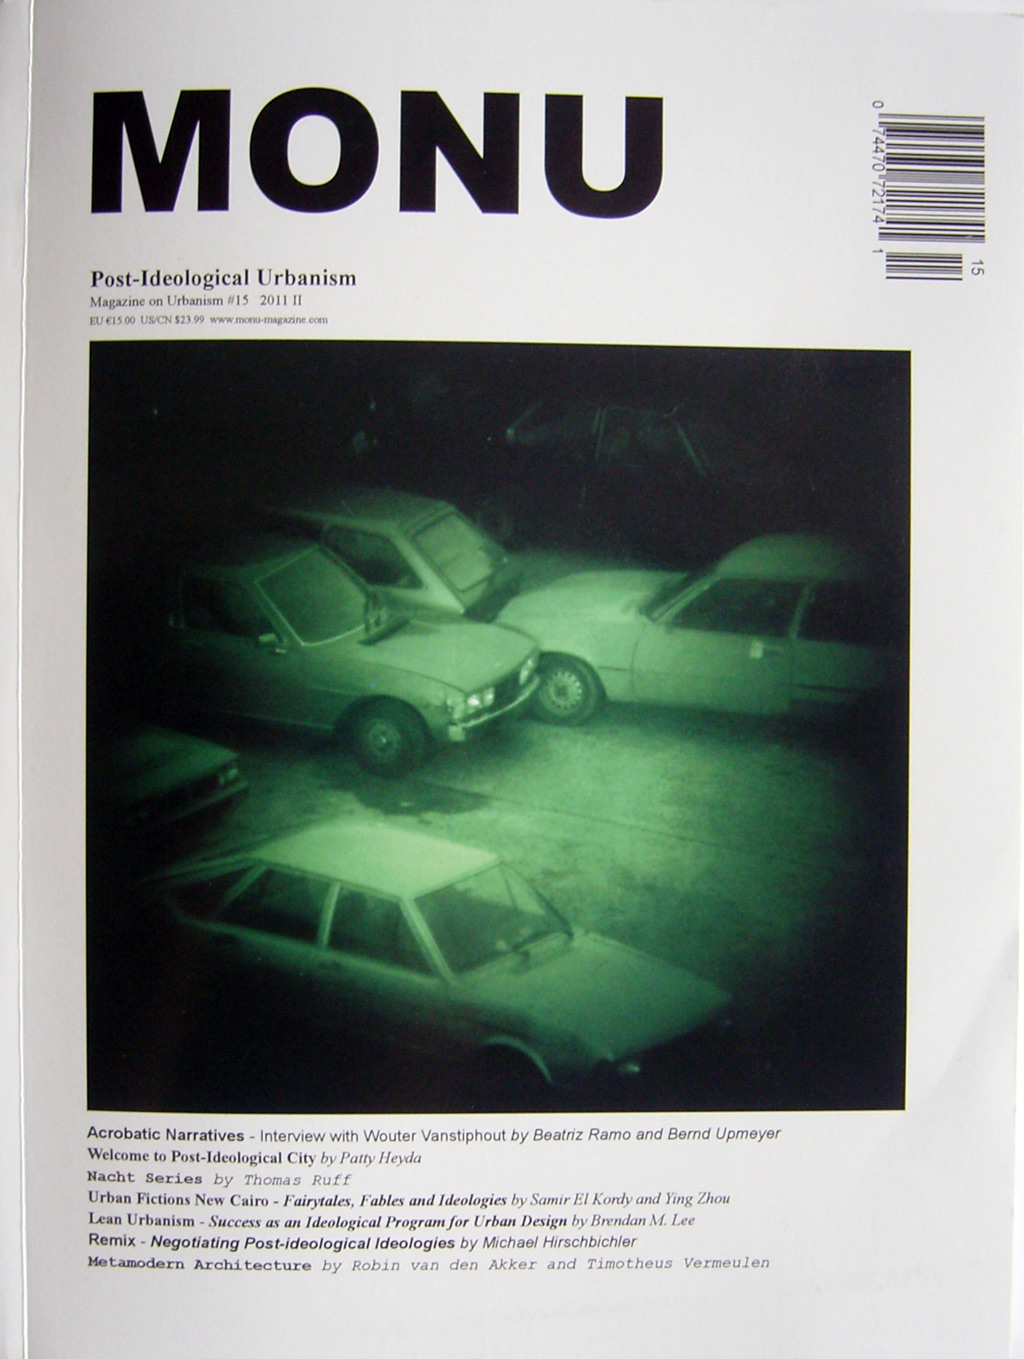 MONU Magazine on Urbanism 15 – Post-Ideological Urbanism